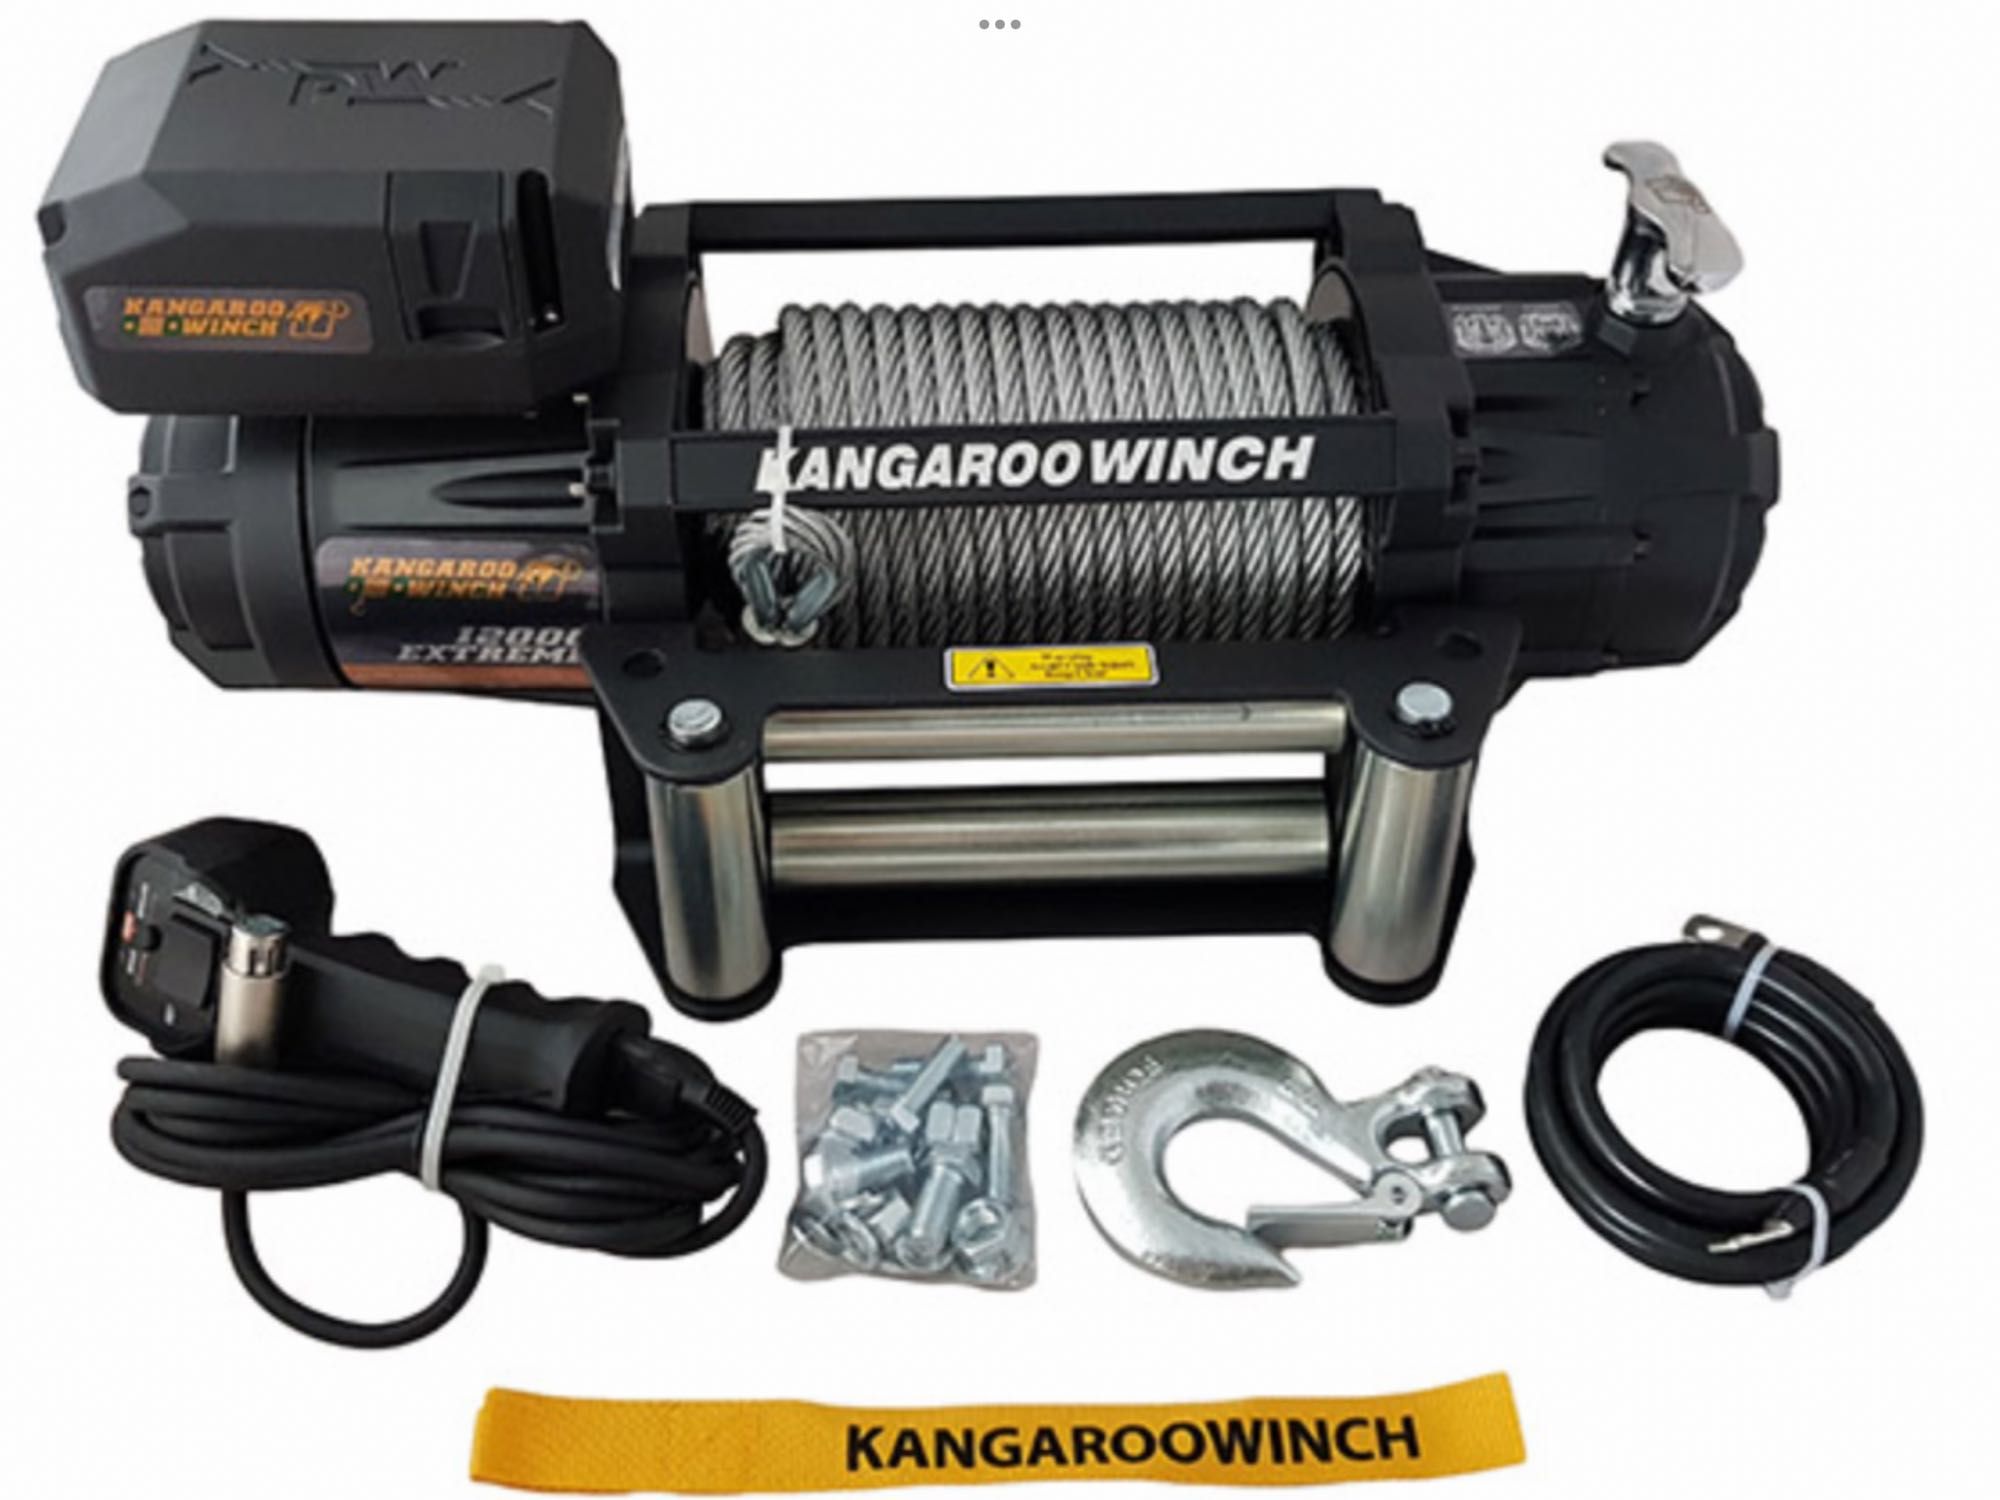 Troliu electric KangarooWinch PowerWinch K 12000 EXTREME HD   Top